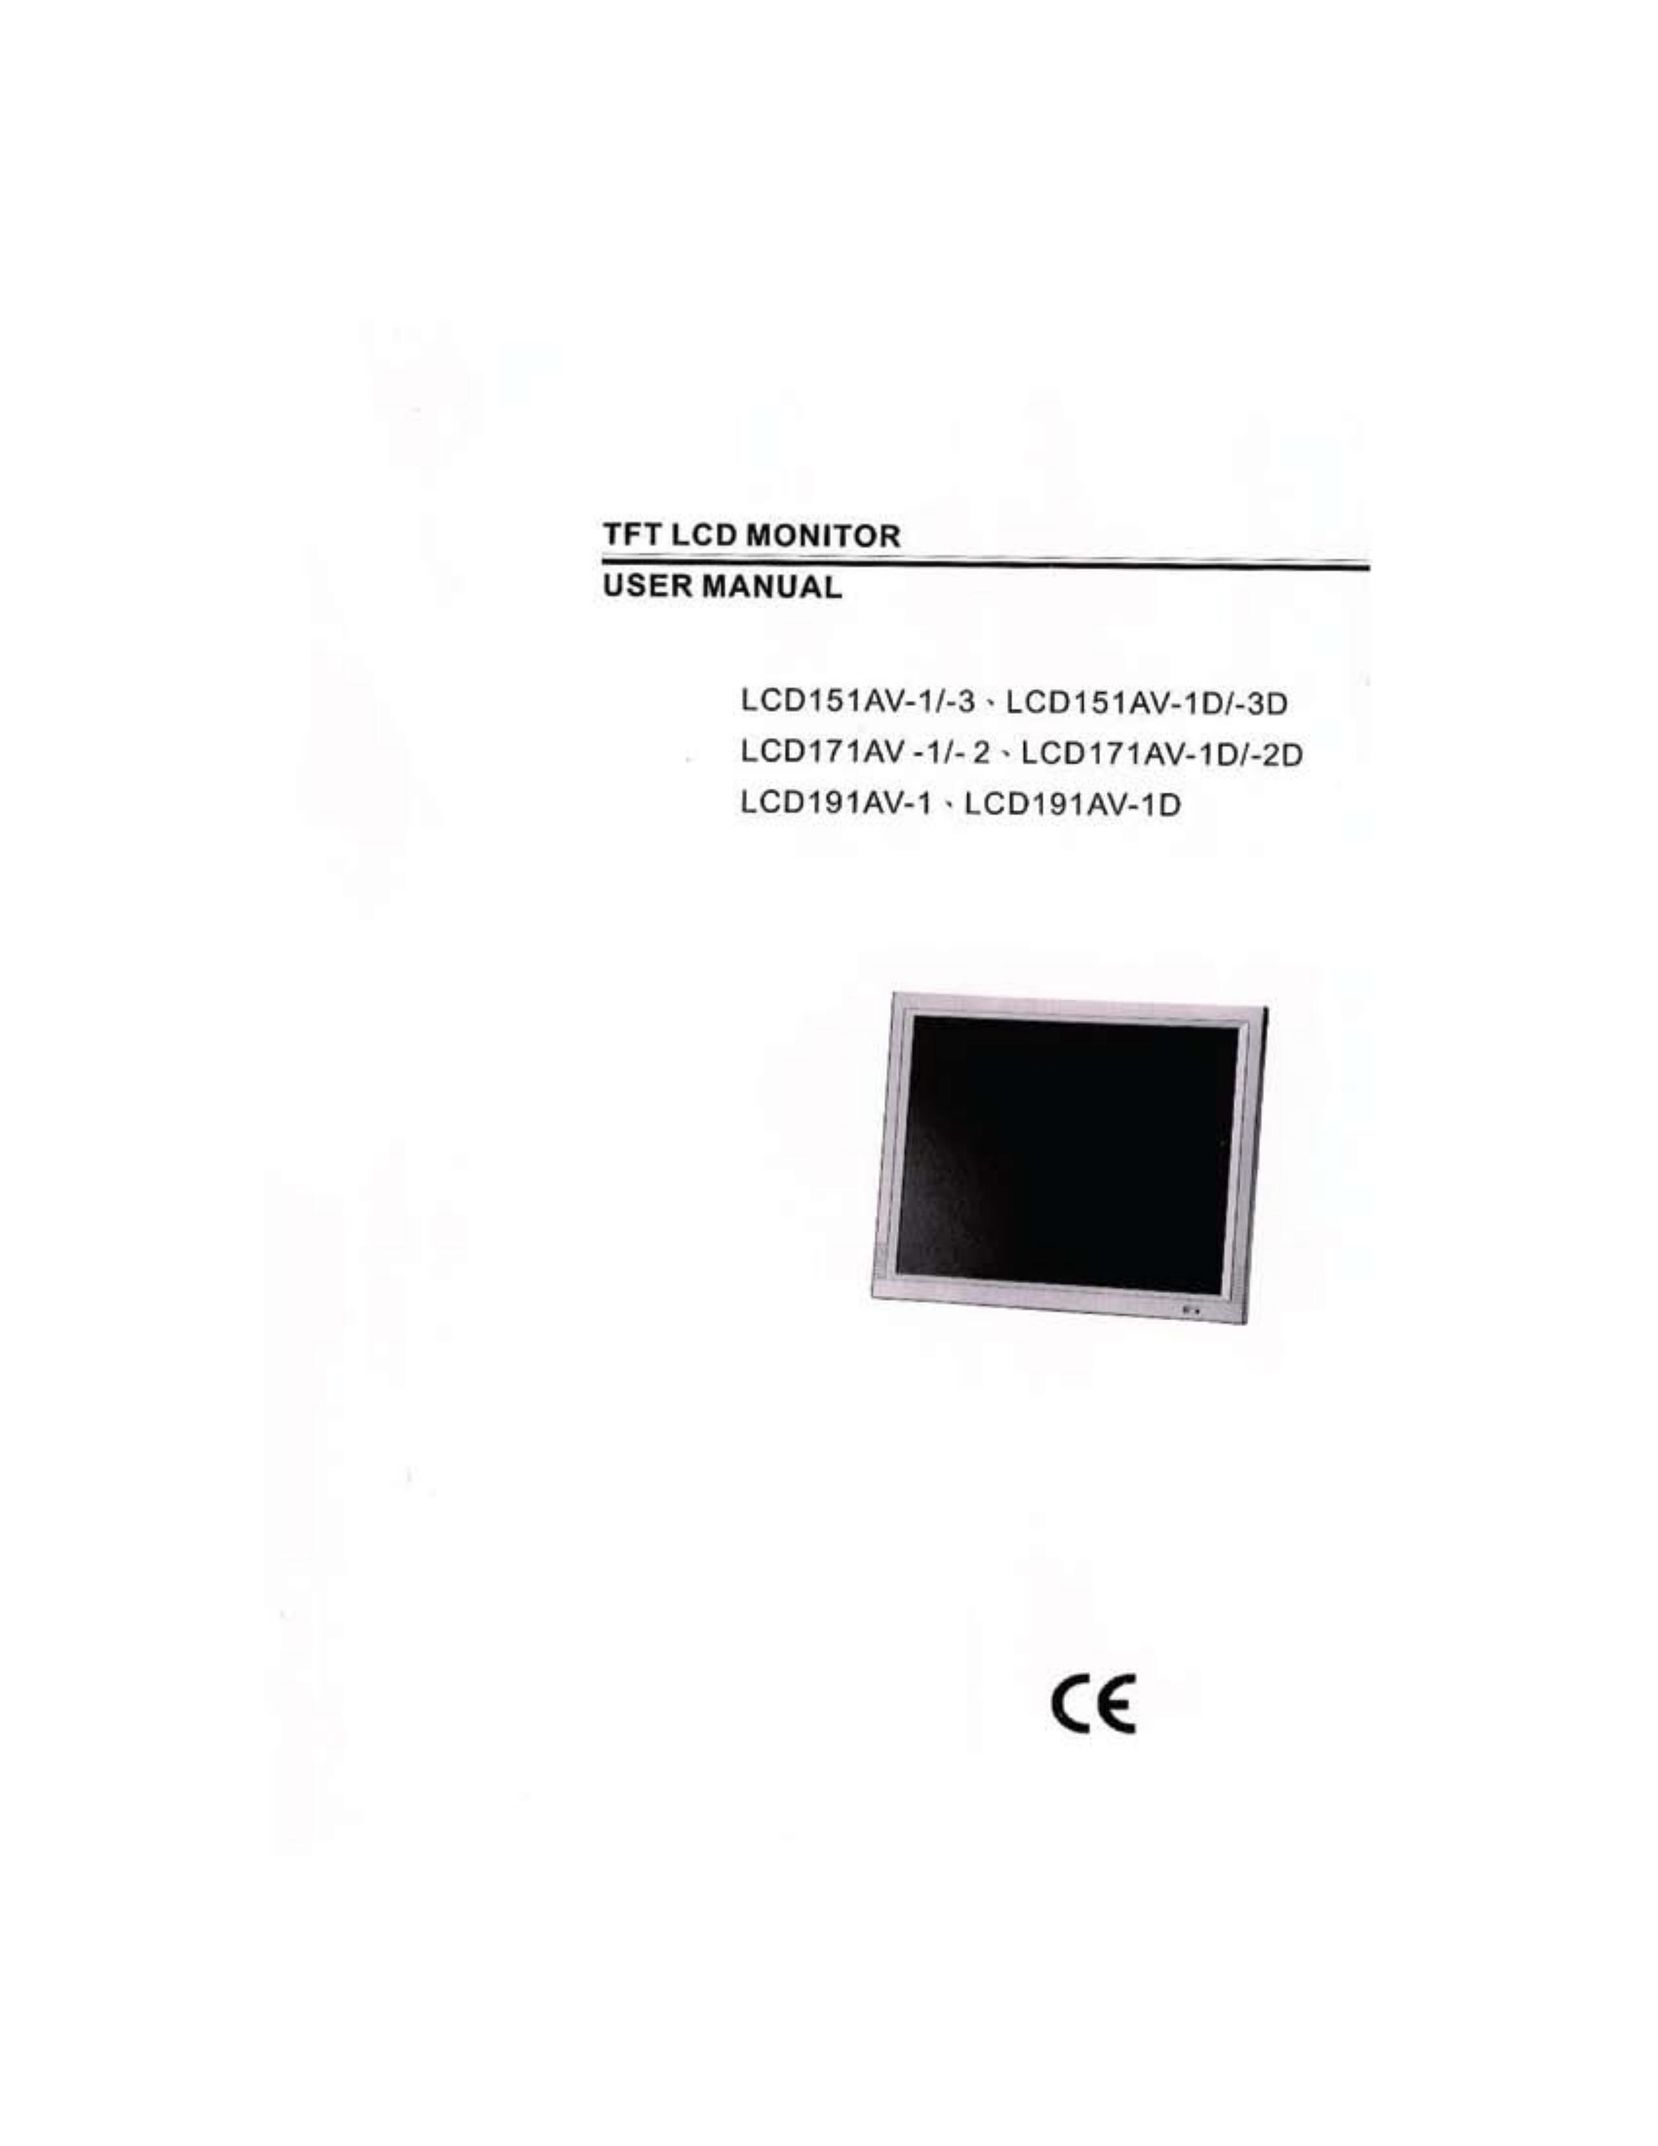 AVE LCD171AV-1D/-2D Computer Monitor User Manual